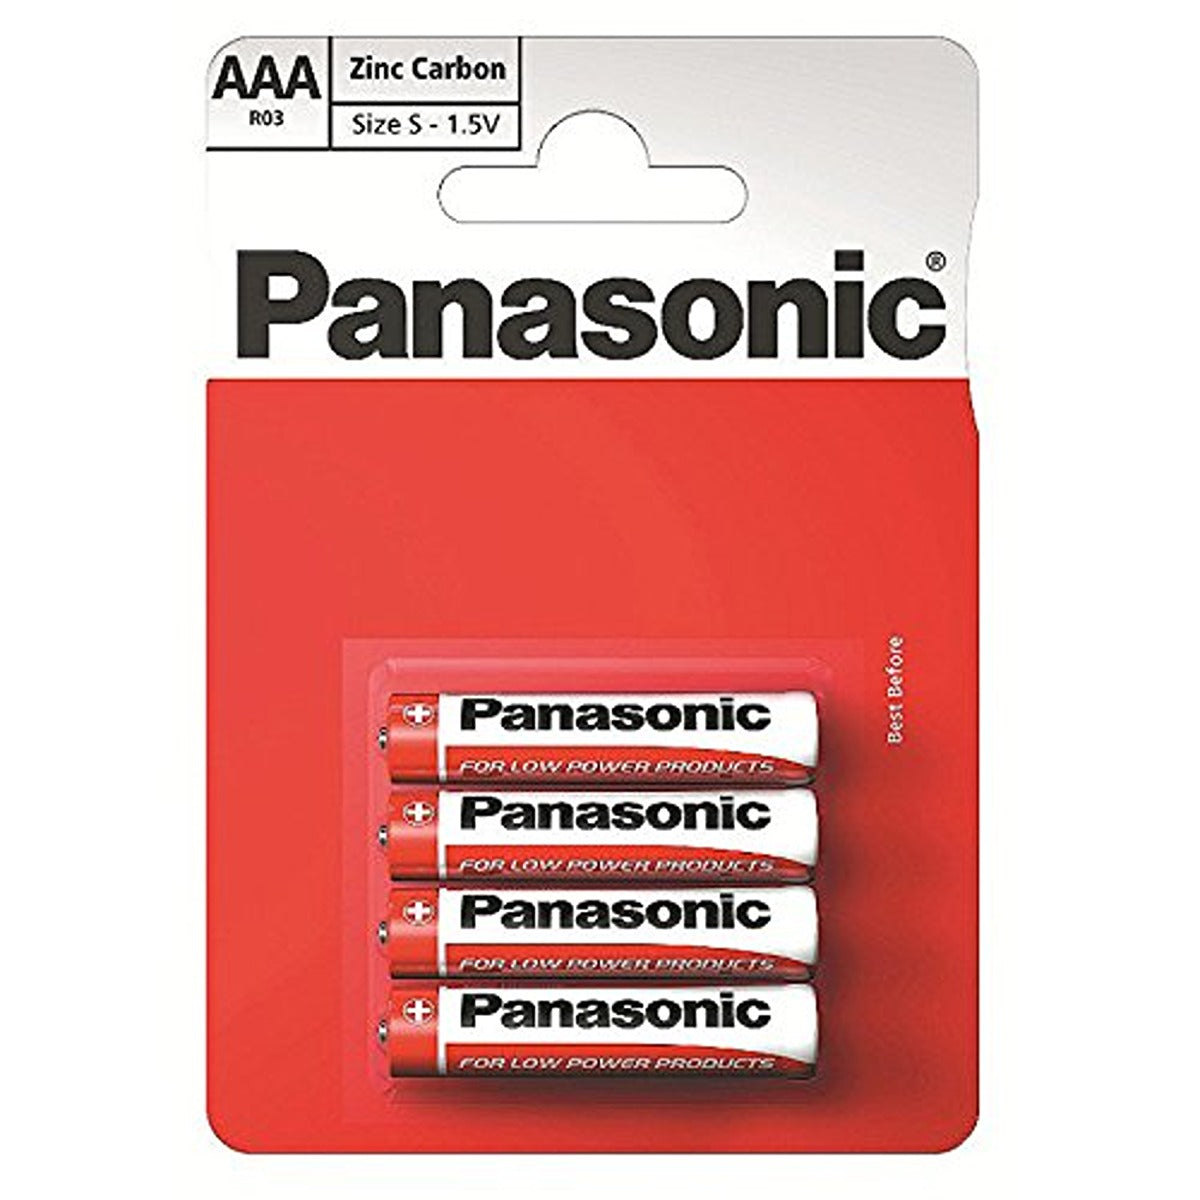 Panasonic - R03 AAA Zinc-Carbon Battery - Continental Food Store